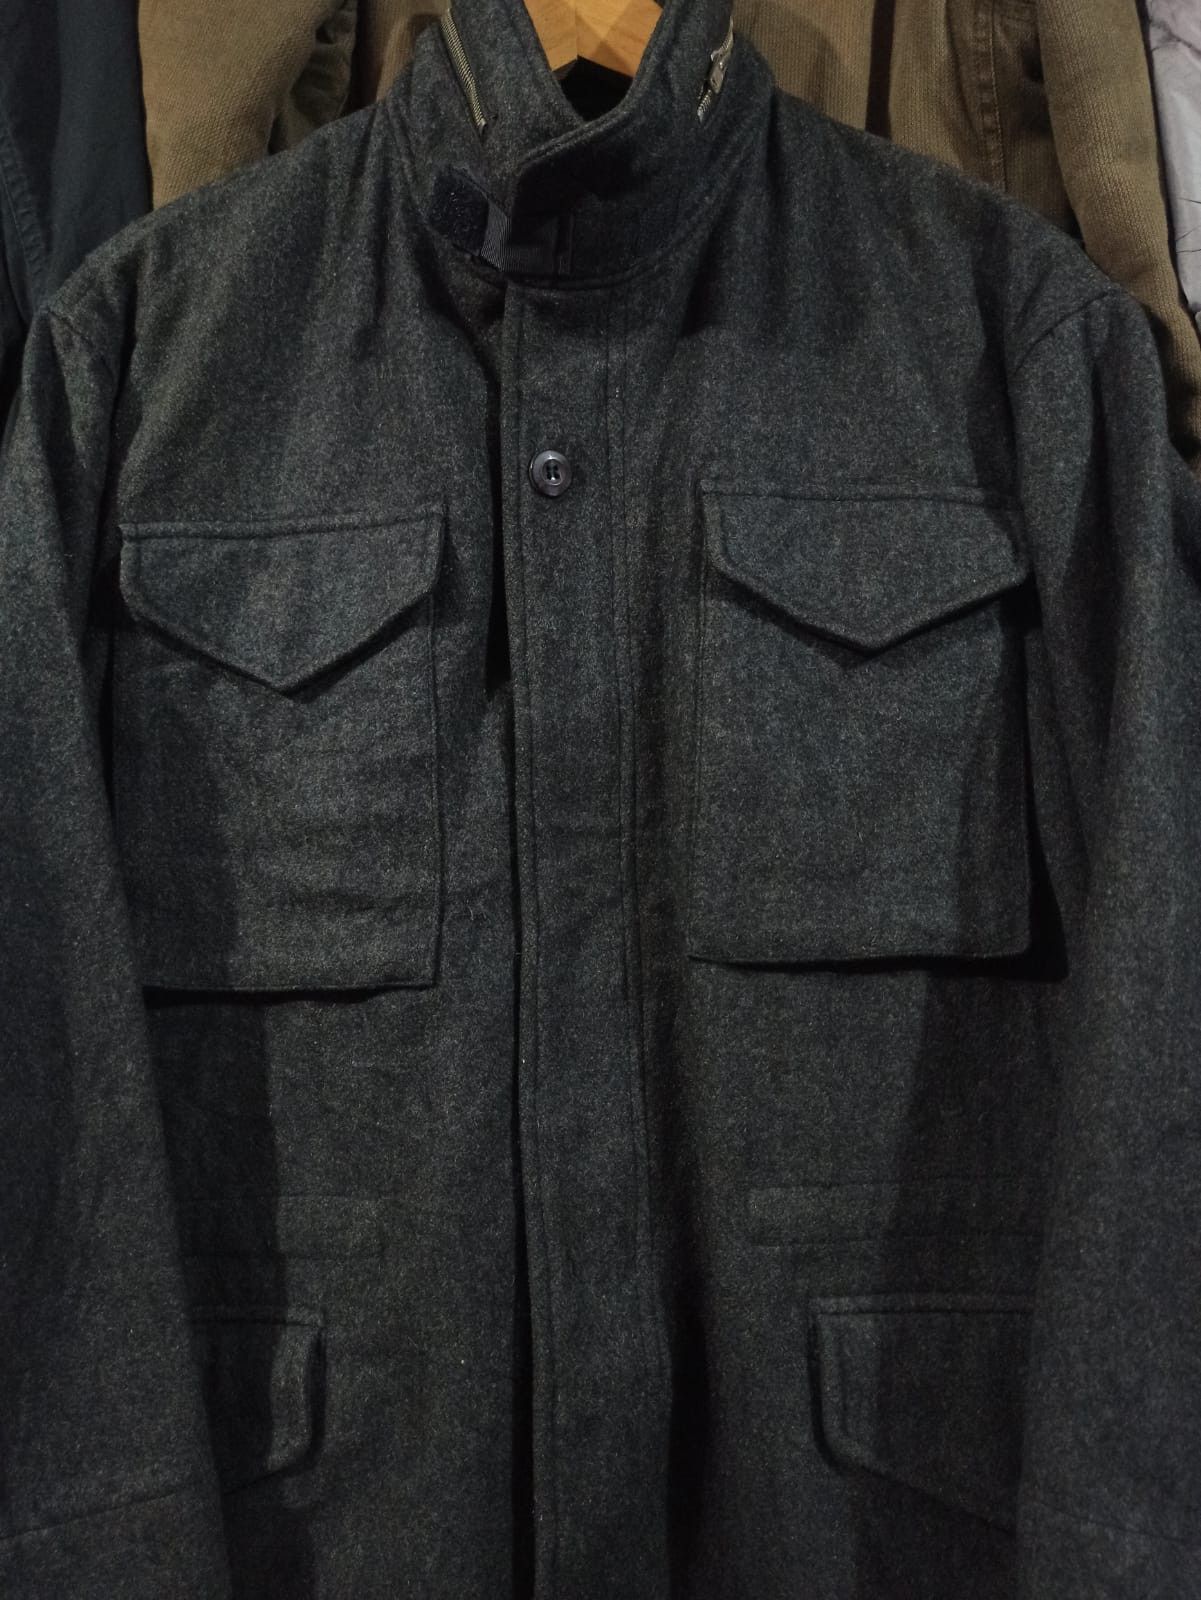 Military United arrow blue label M65 Jacket wool fashion | Grailed